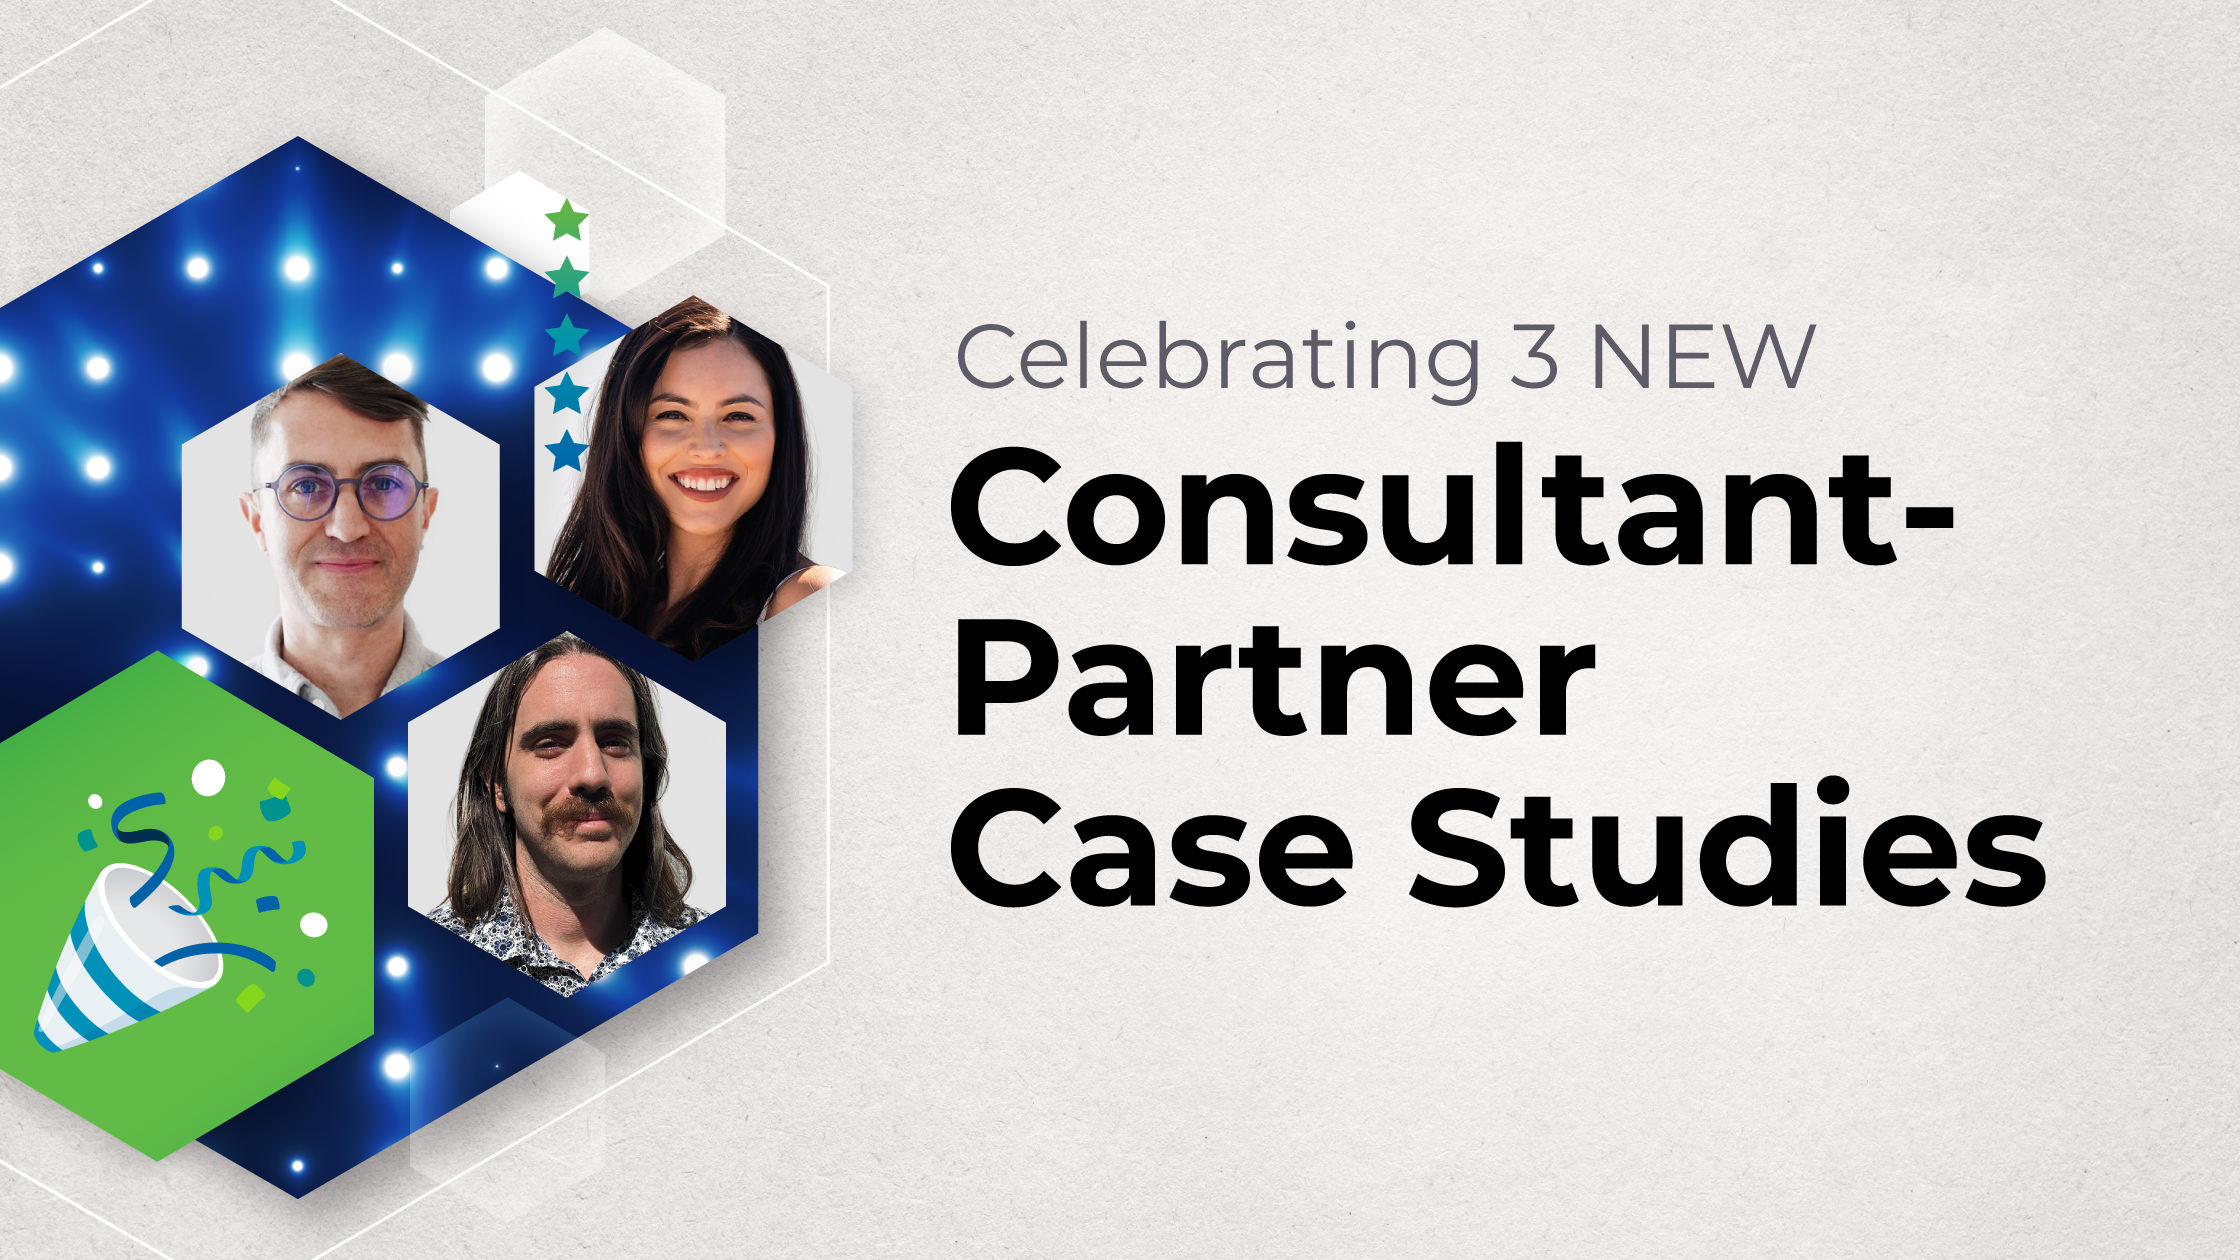 Celebrating 3 NEW Consultant-Partner Case Studies